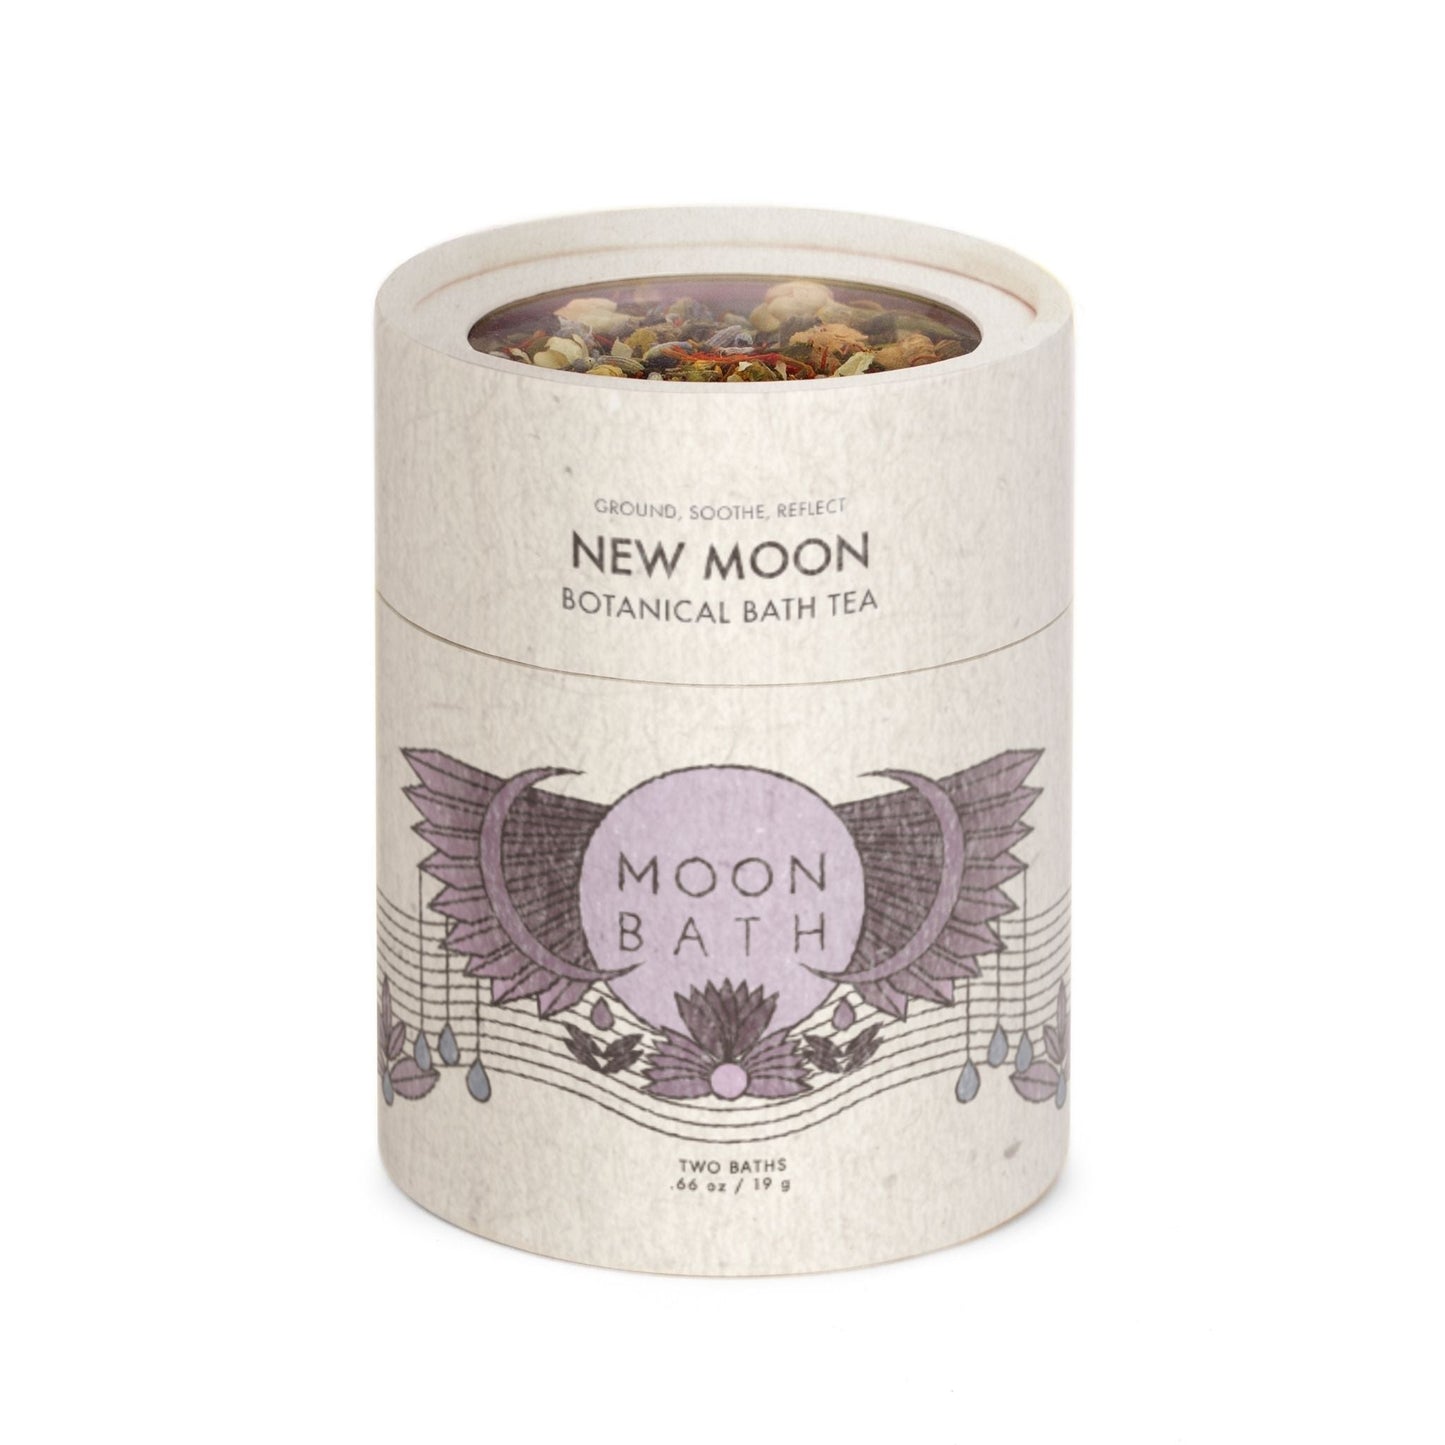 New Moon by Moon Bath